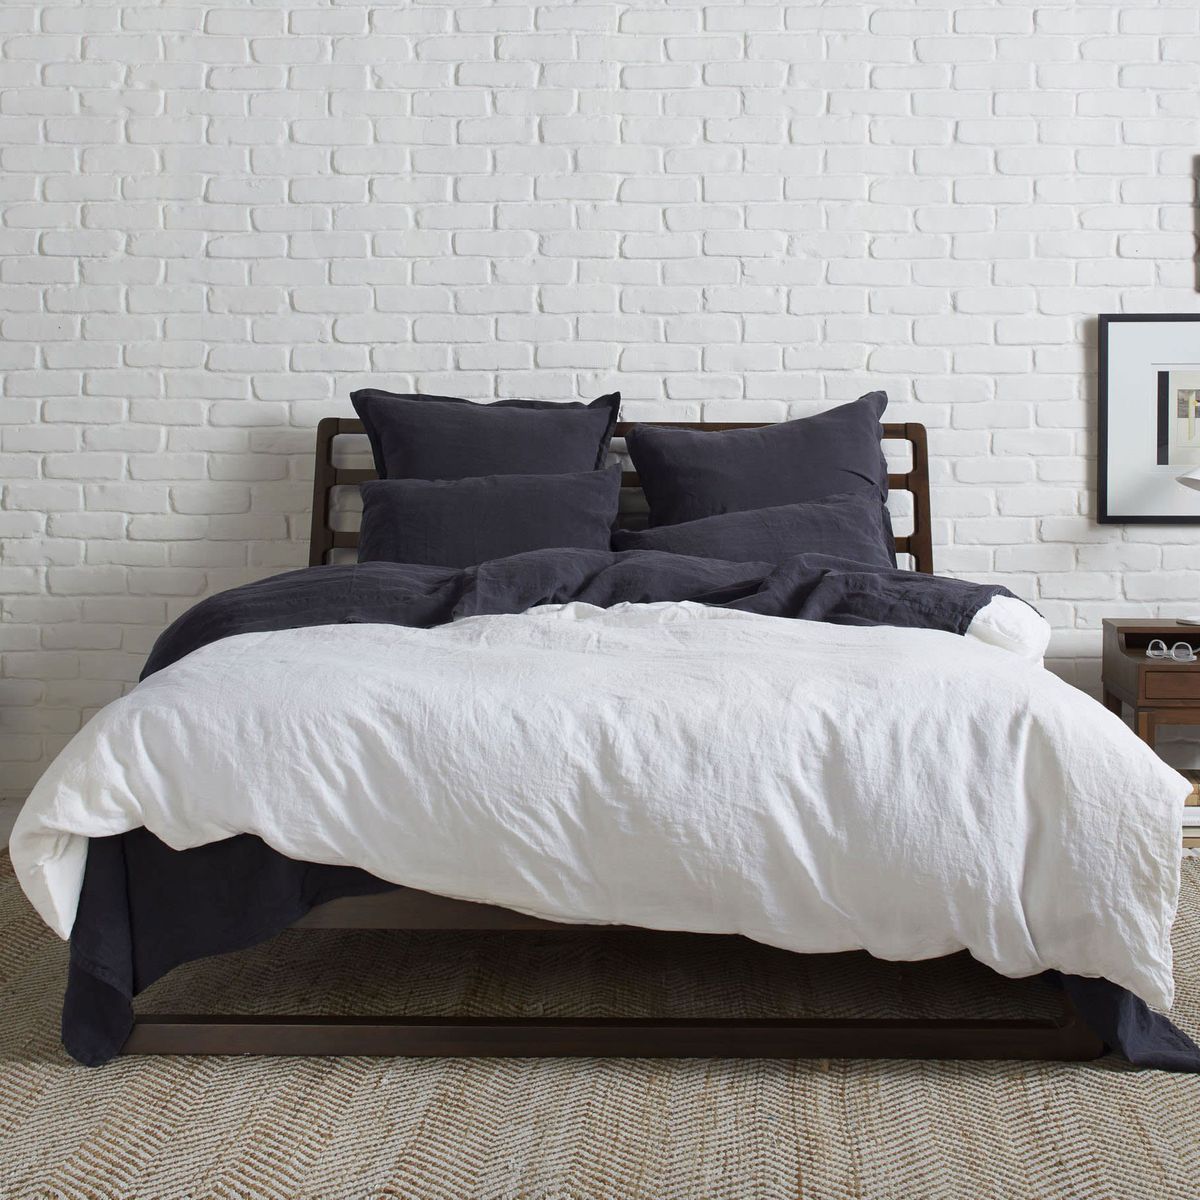 Reversible Solid Color Quilt Duvet Cover Single Double King Bedding Sets Decor 